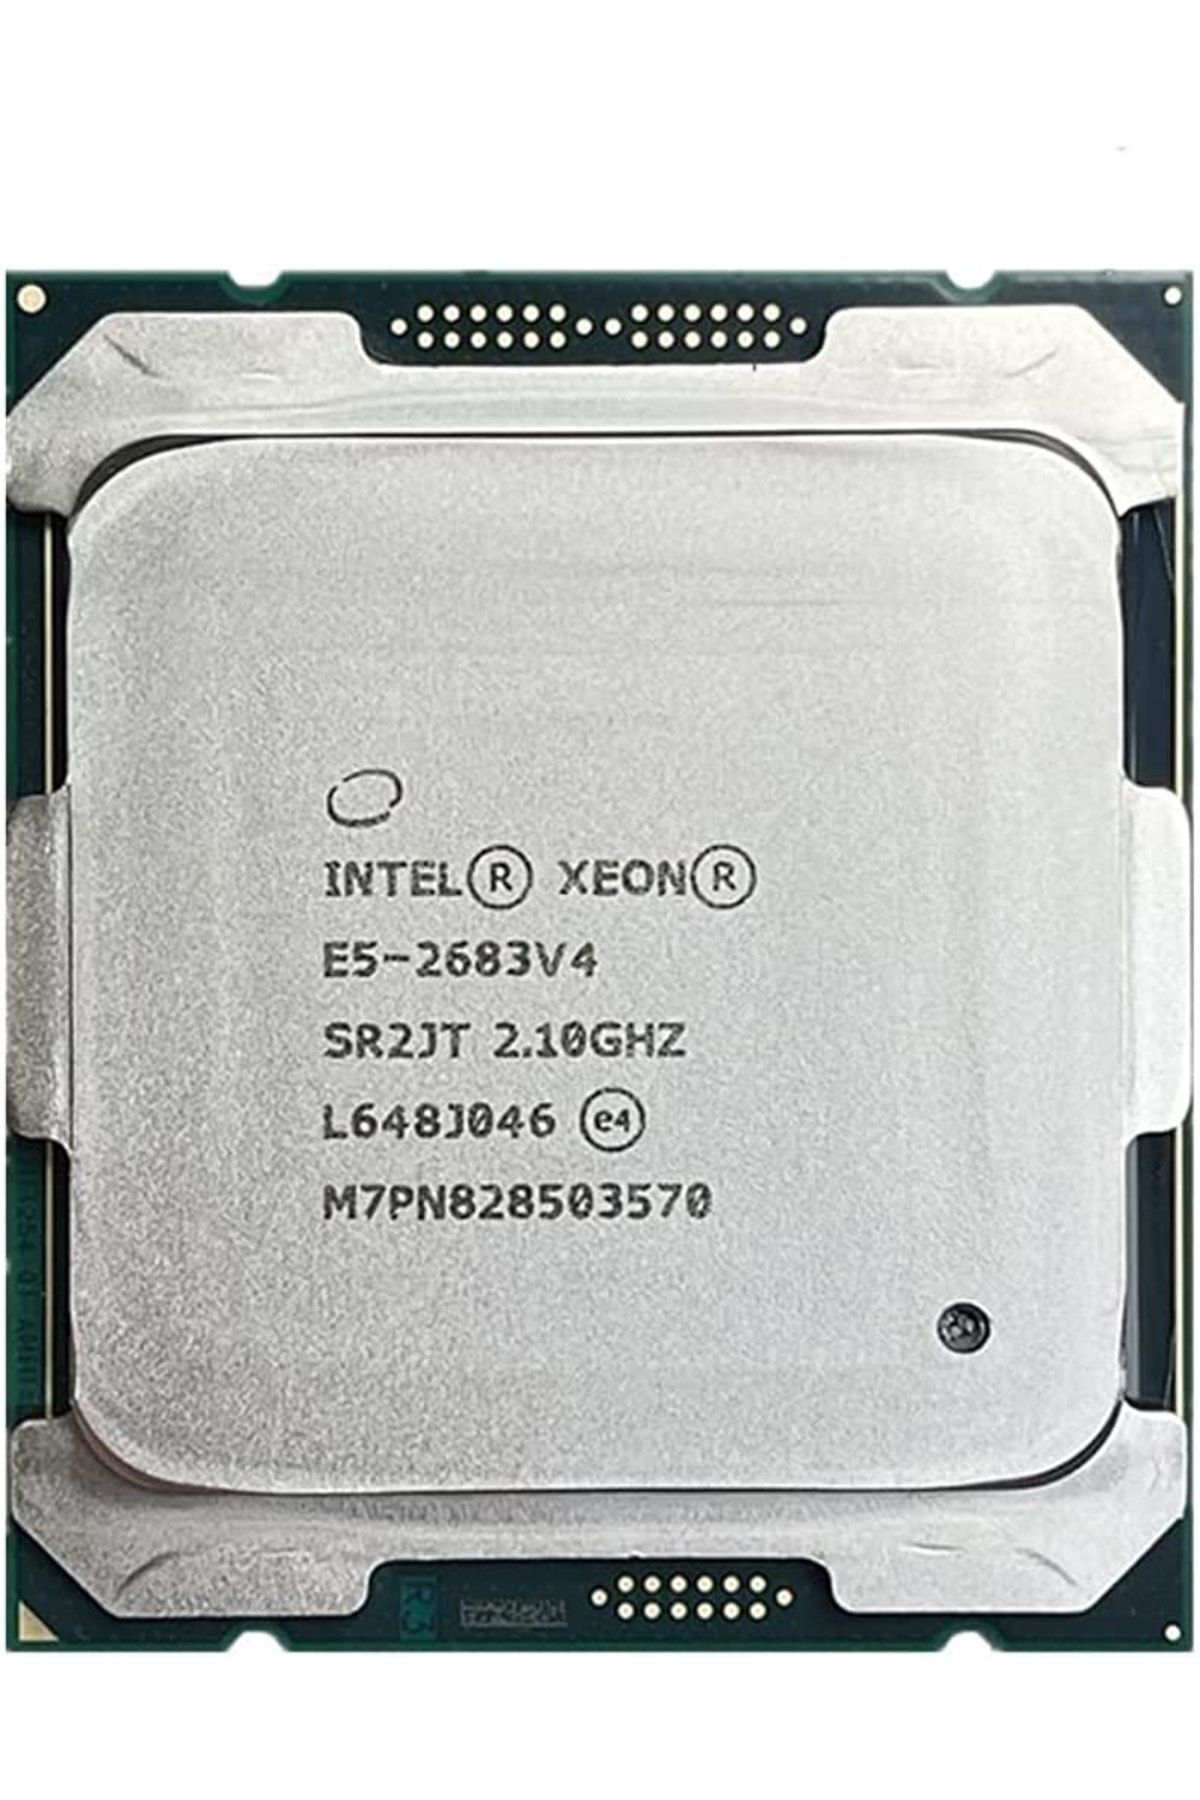 Intel Xeon E5 2683 V4 16 Gerçek 16 Sanal 32 Çekirdek 2.1 Ghz 40 Mb Cache 2011-3 Soket 120 Watt Işlemci